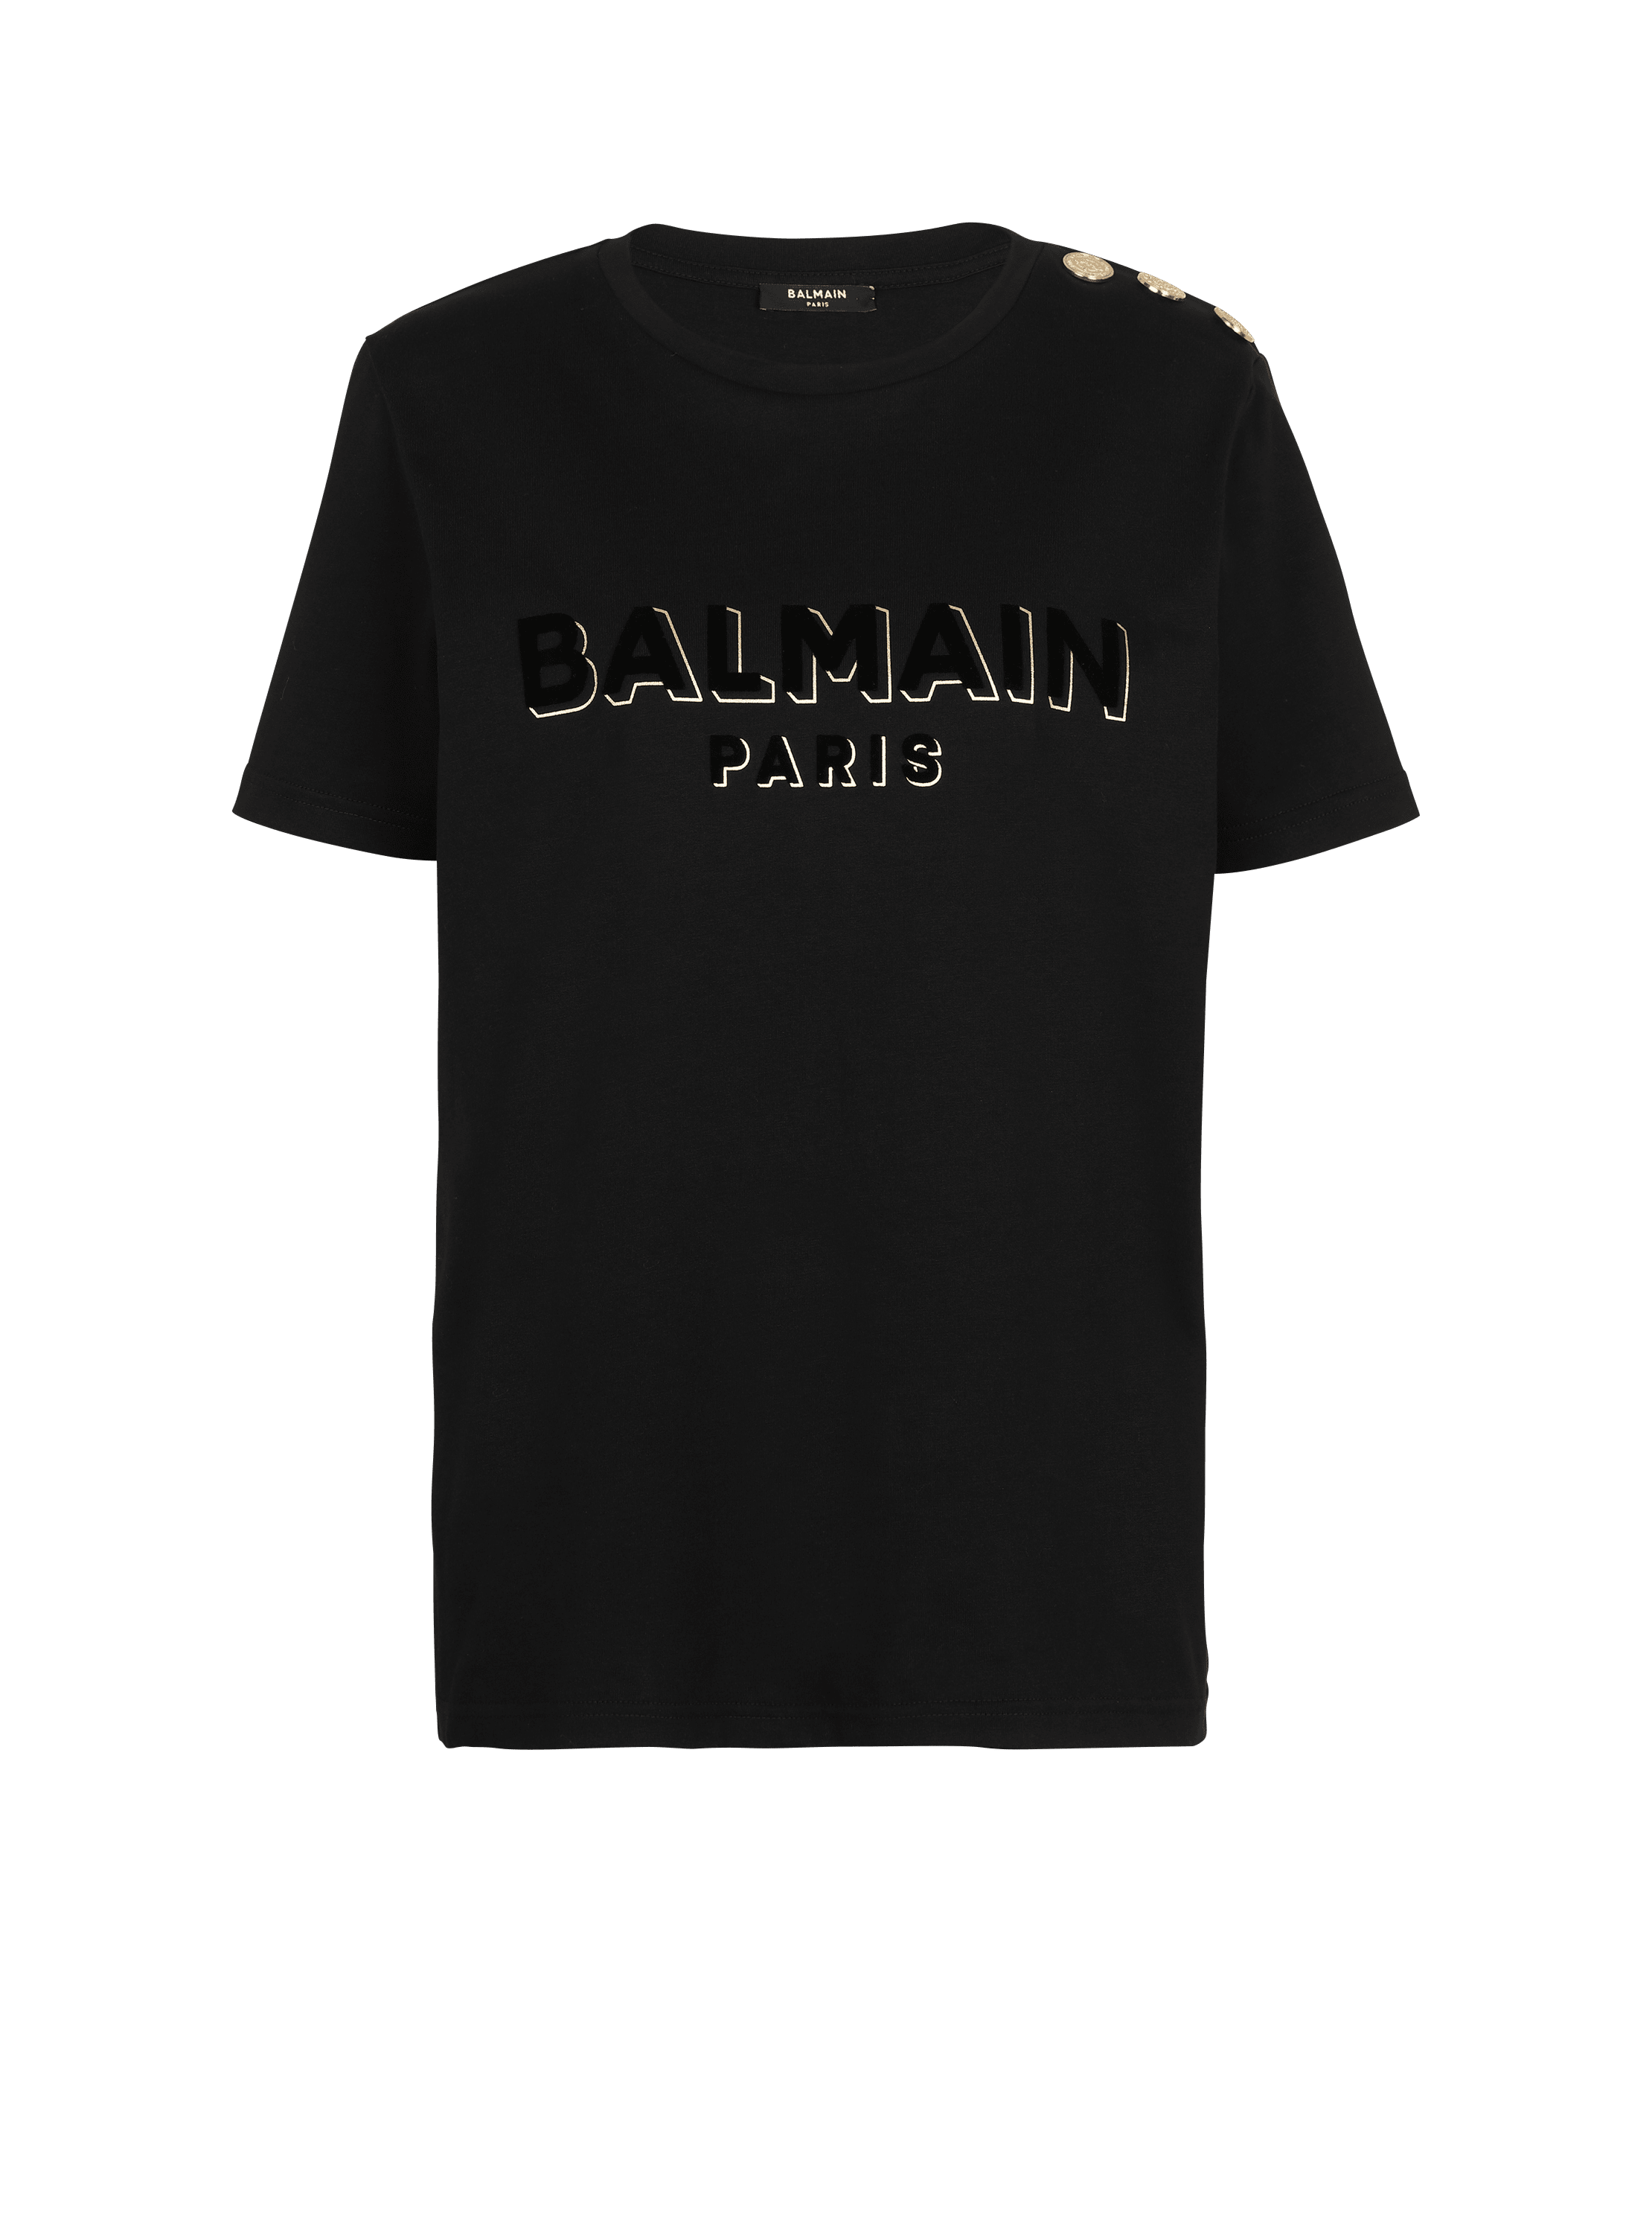 Camiseta de algodón con logotipo metálico serigrafiado de Balmain, negro, hi-res